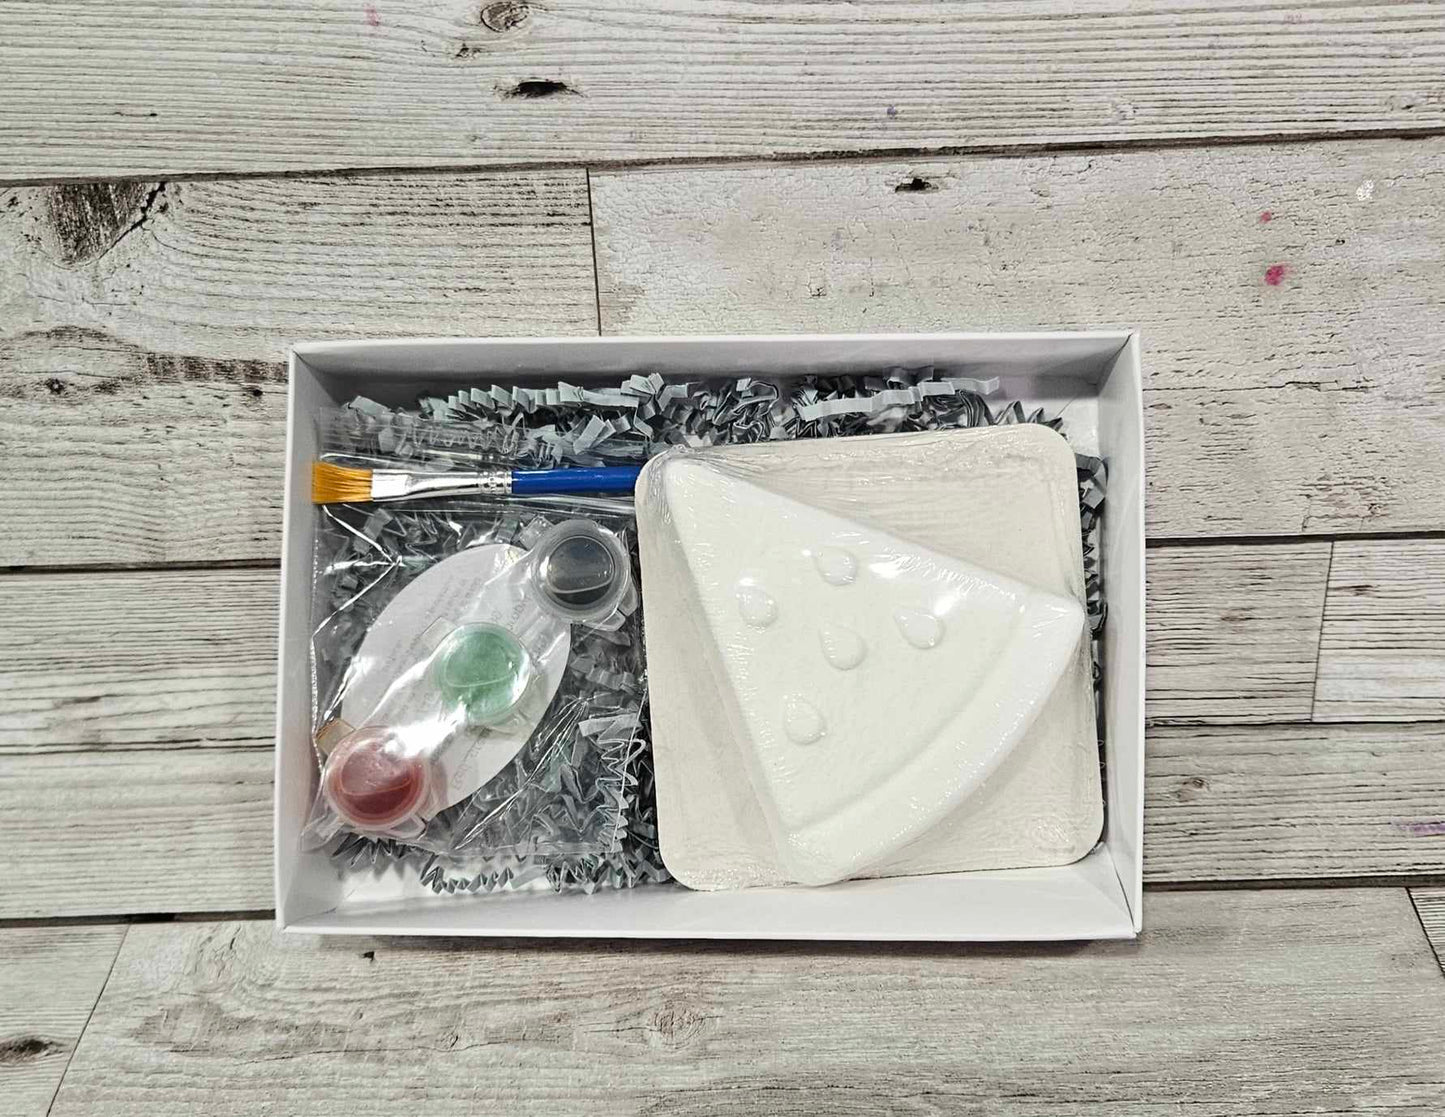 'Watermelon Slice' Paint your own Bath Bomb kit